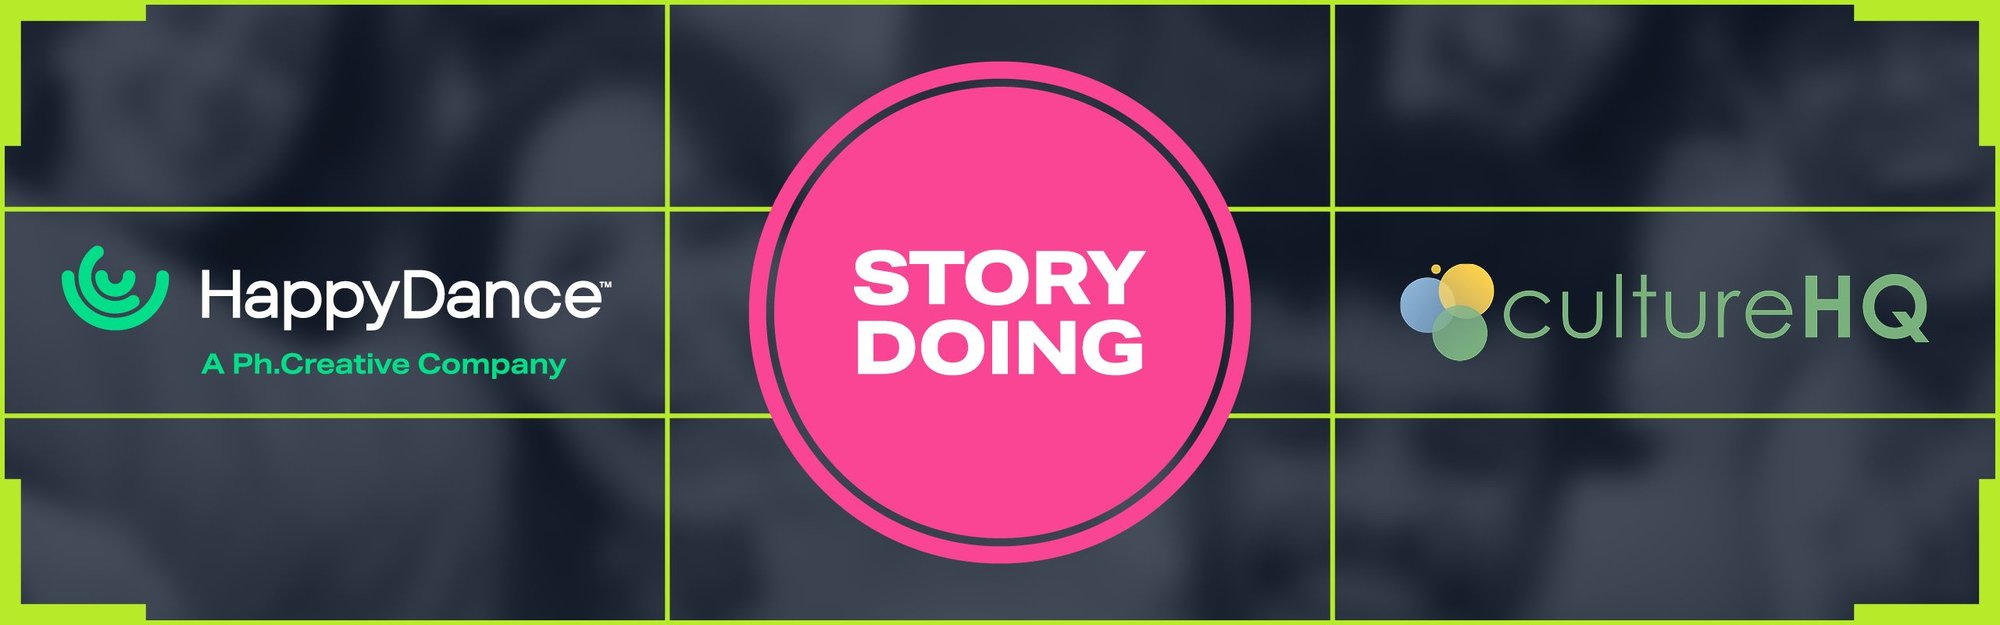 StoryDoing header